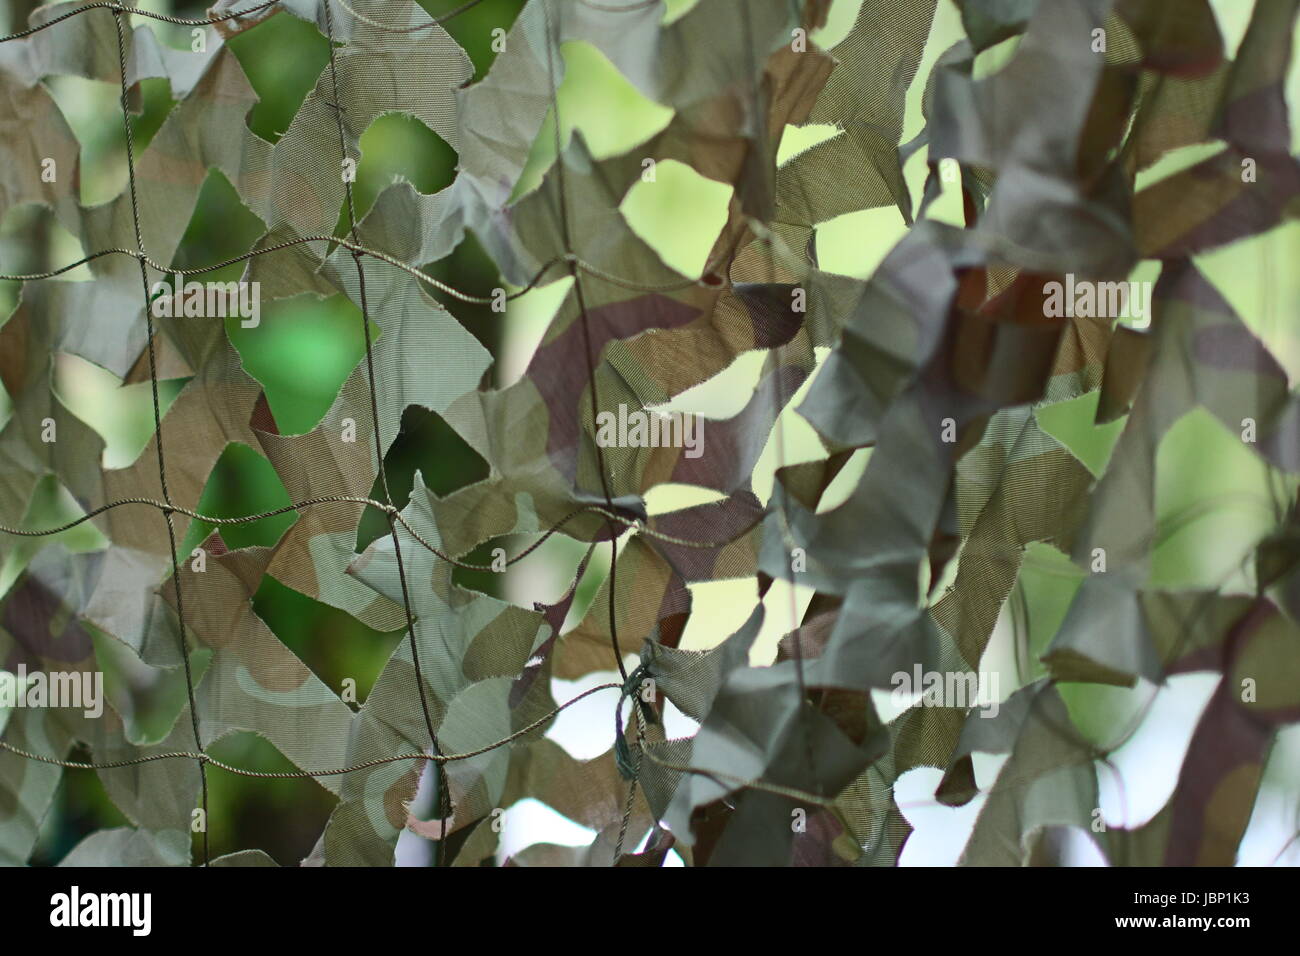 military camouflage net background Stock Photo